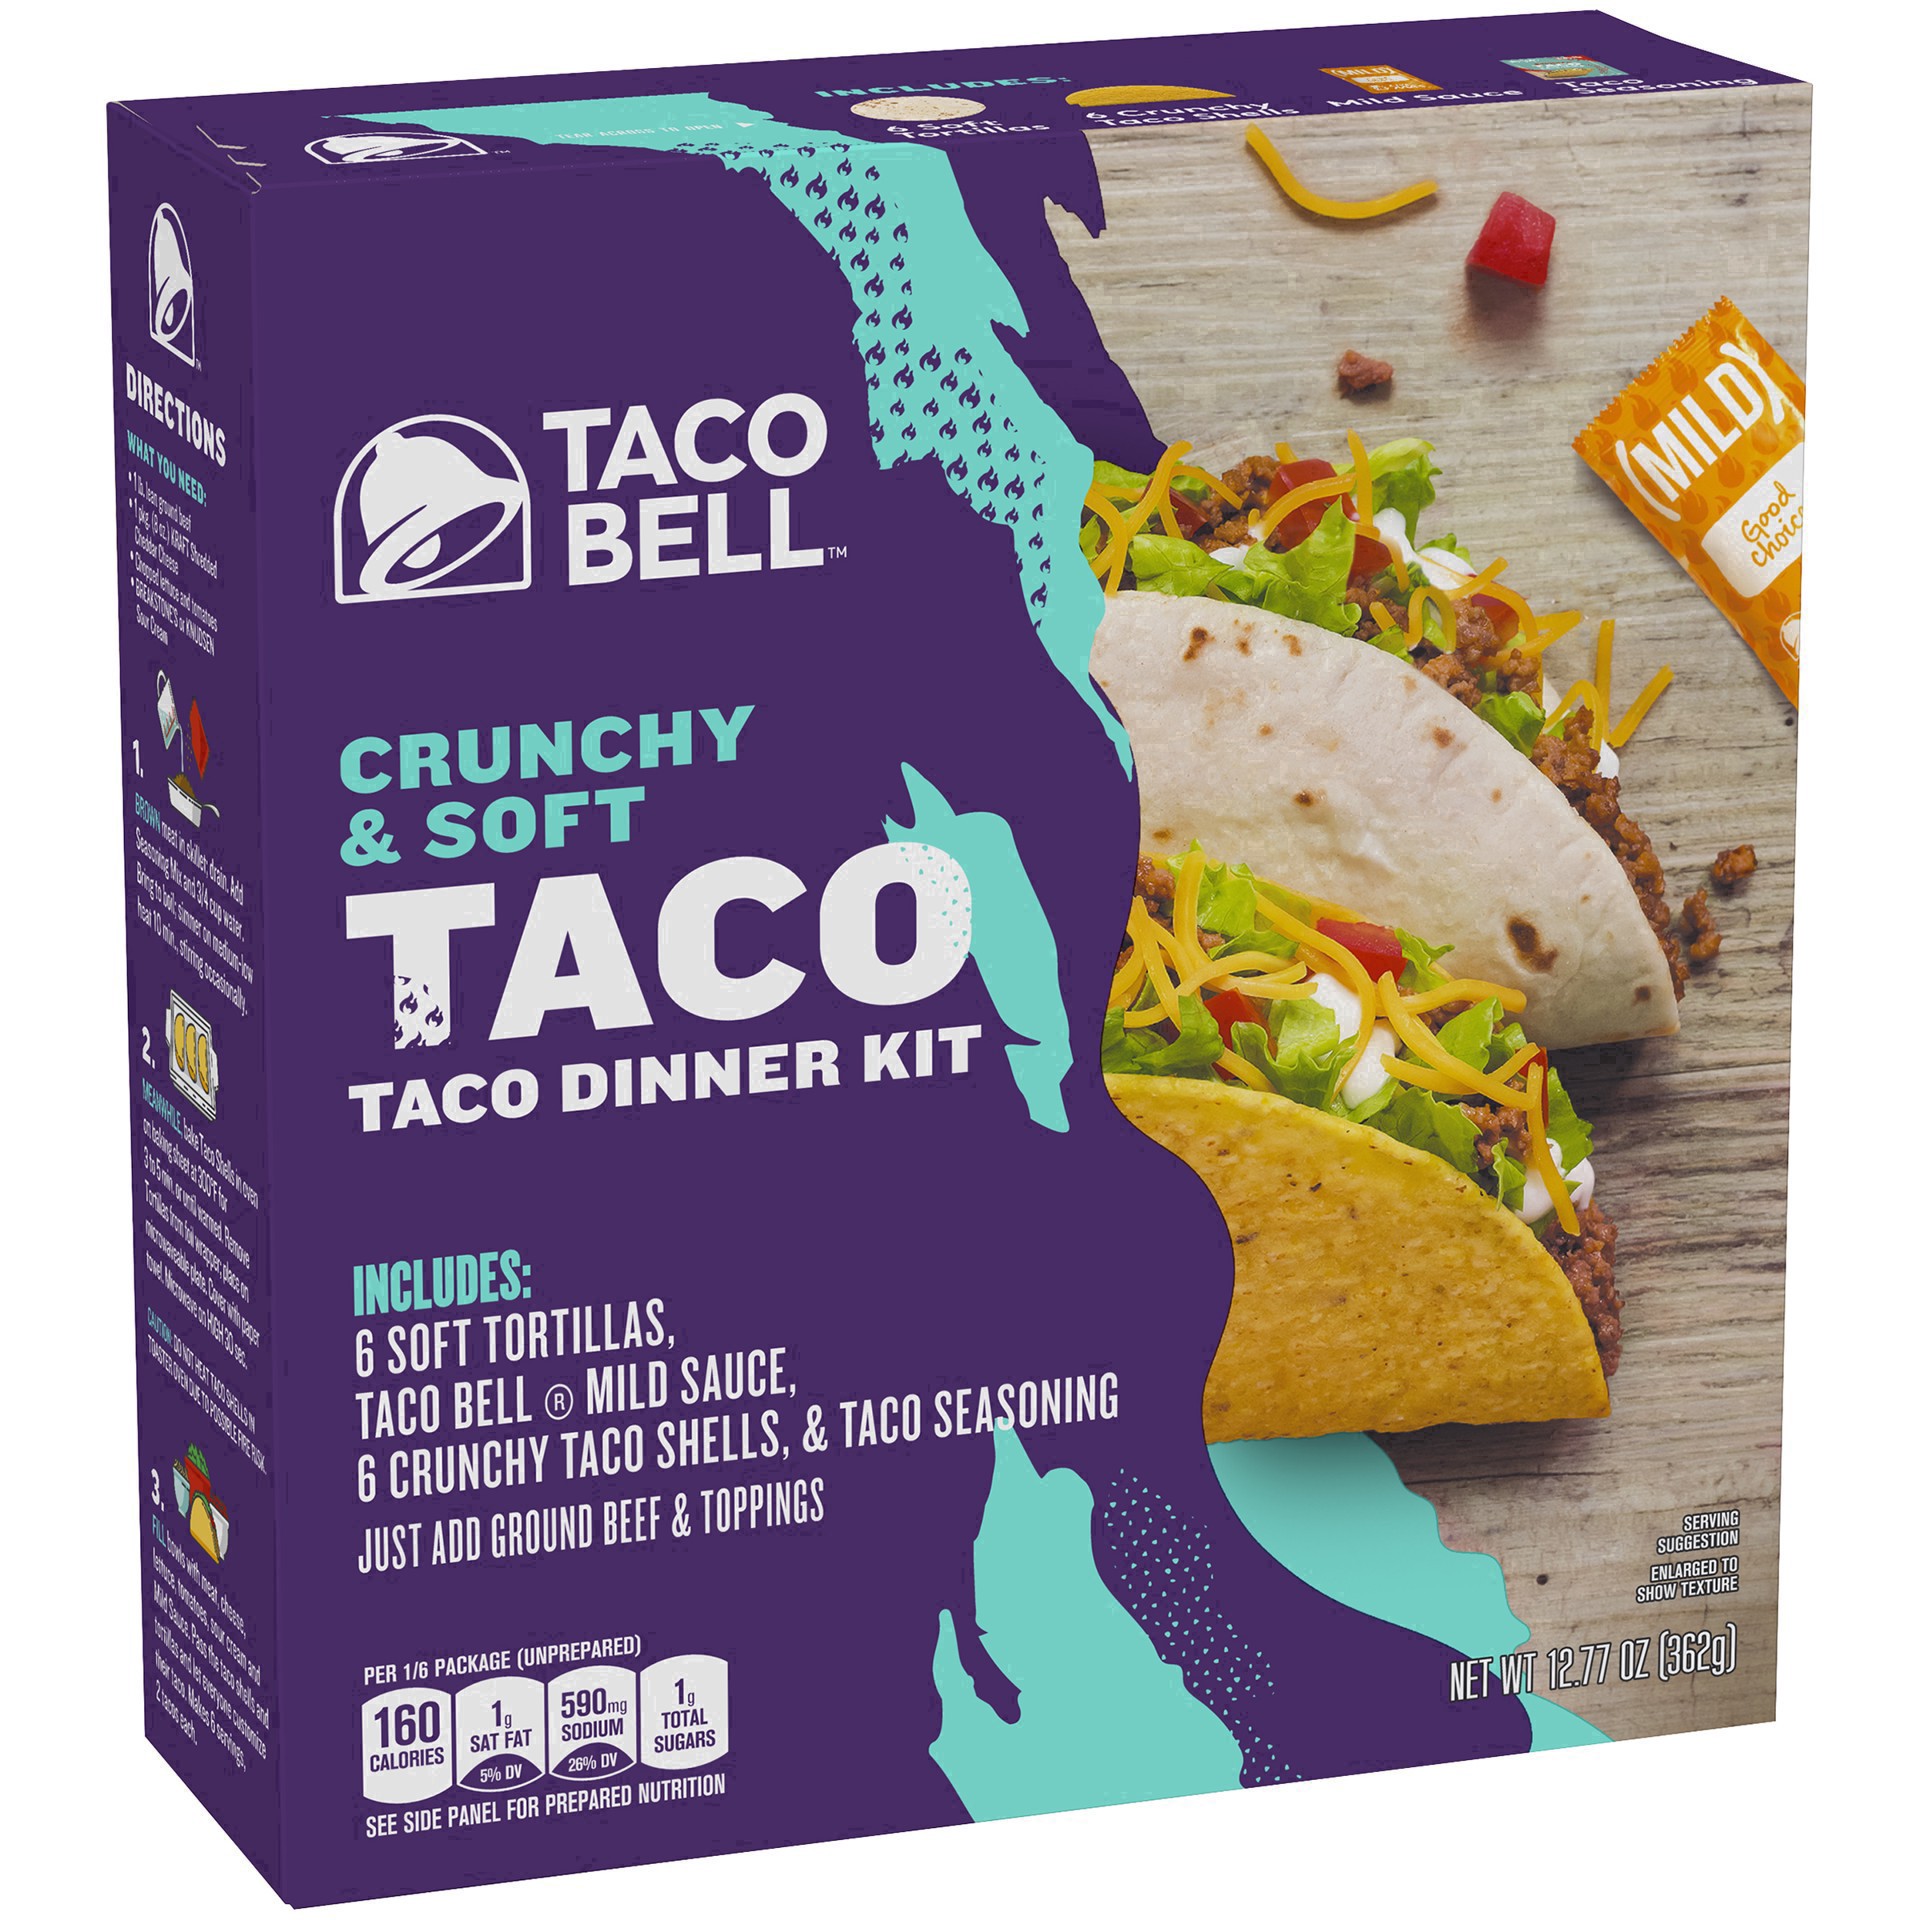 slide 14 of 101, Taco Bell Crunchy & Soft Taco Cravings Kit with 6 Soft Tortillas, 6 Crunchy Taco Shells, Taco Bell Mild Sauce & Seasoning, 12.77 oz Box, 1 ct